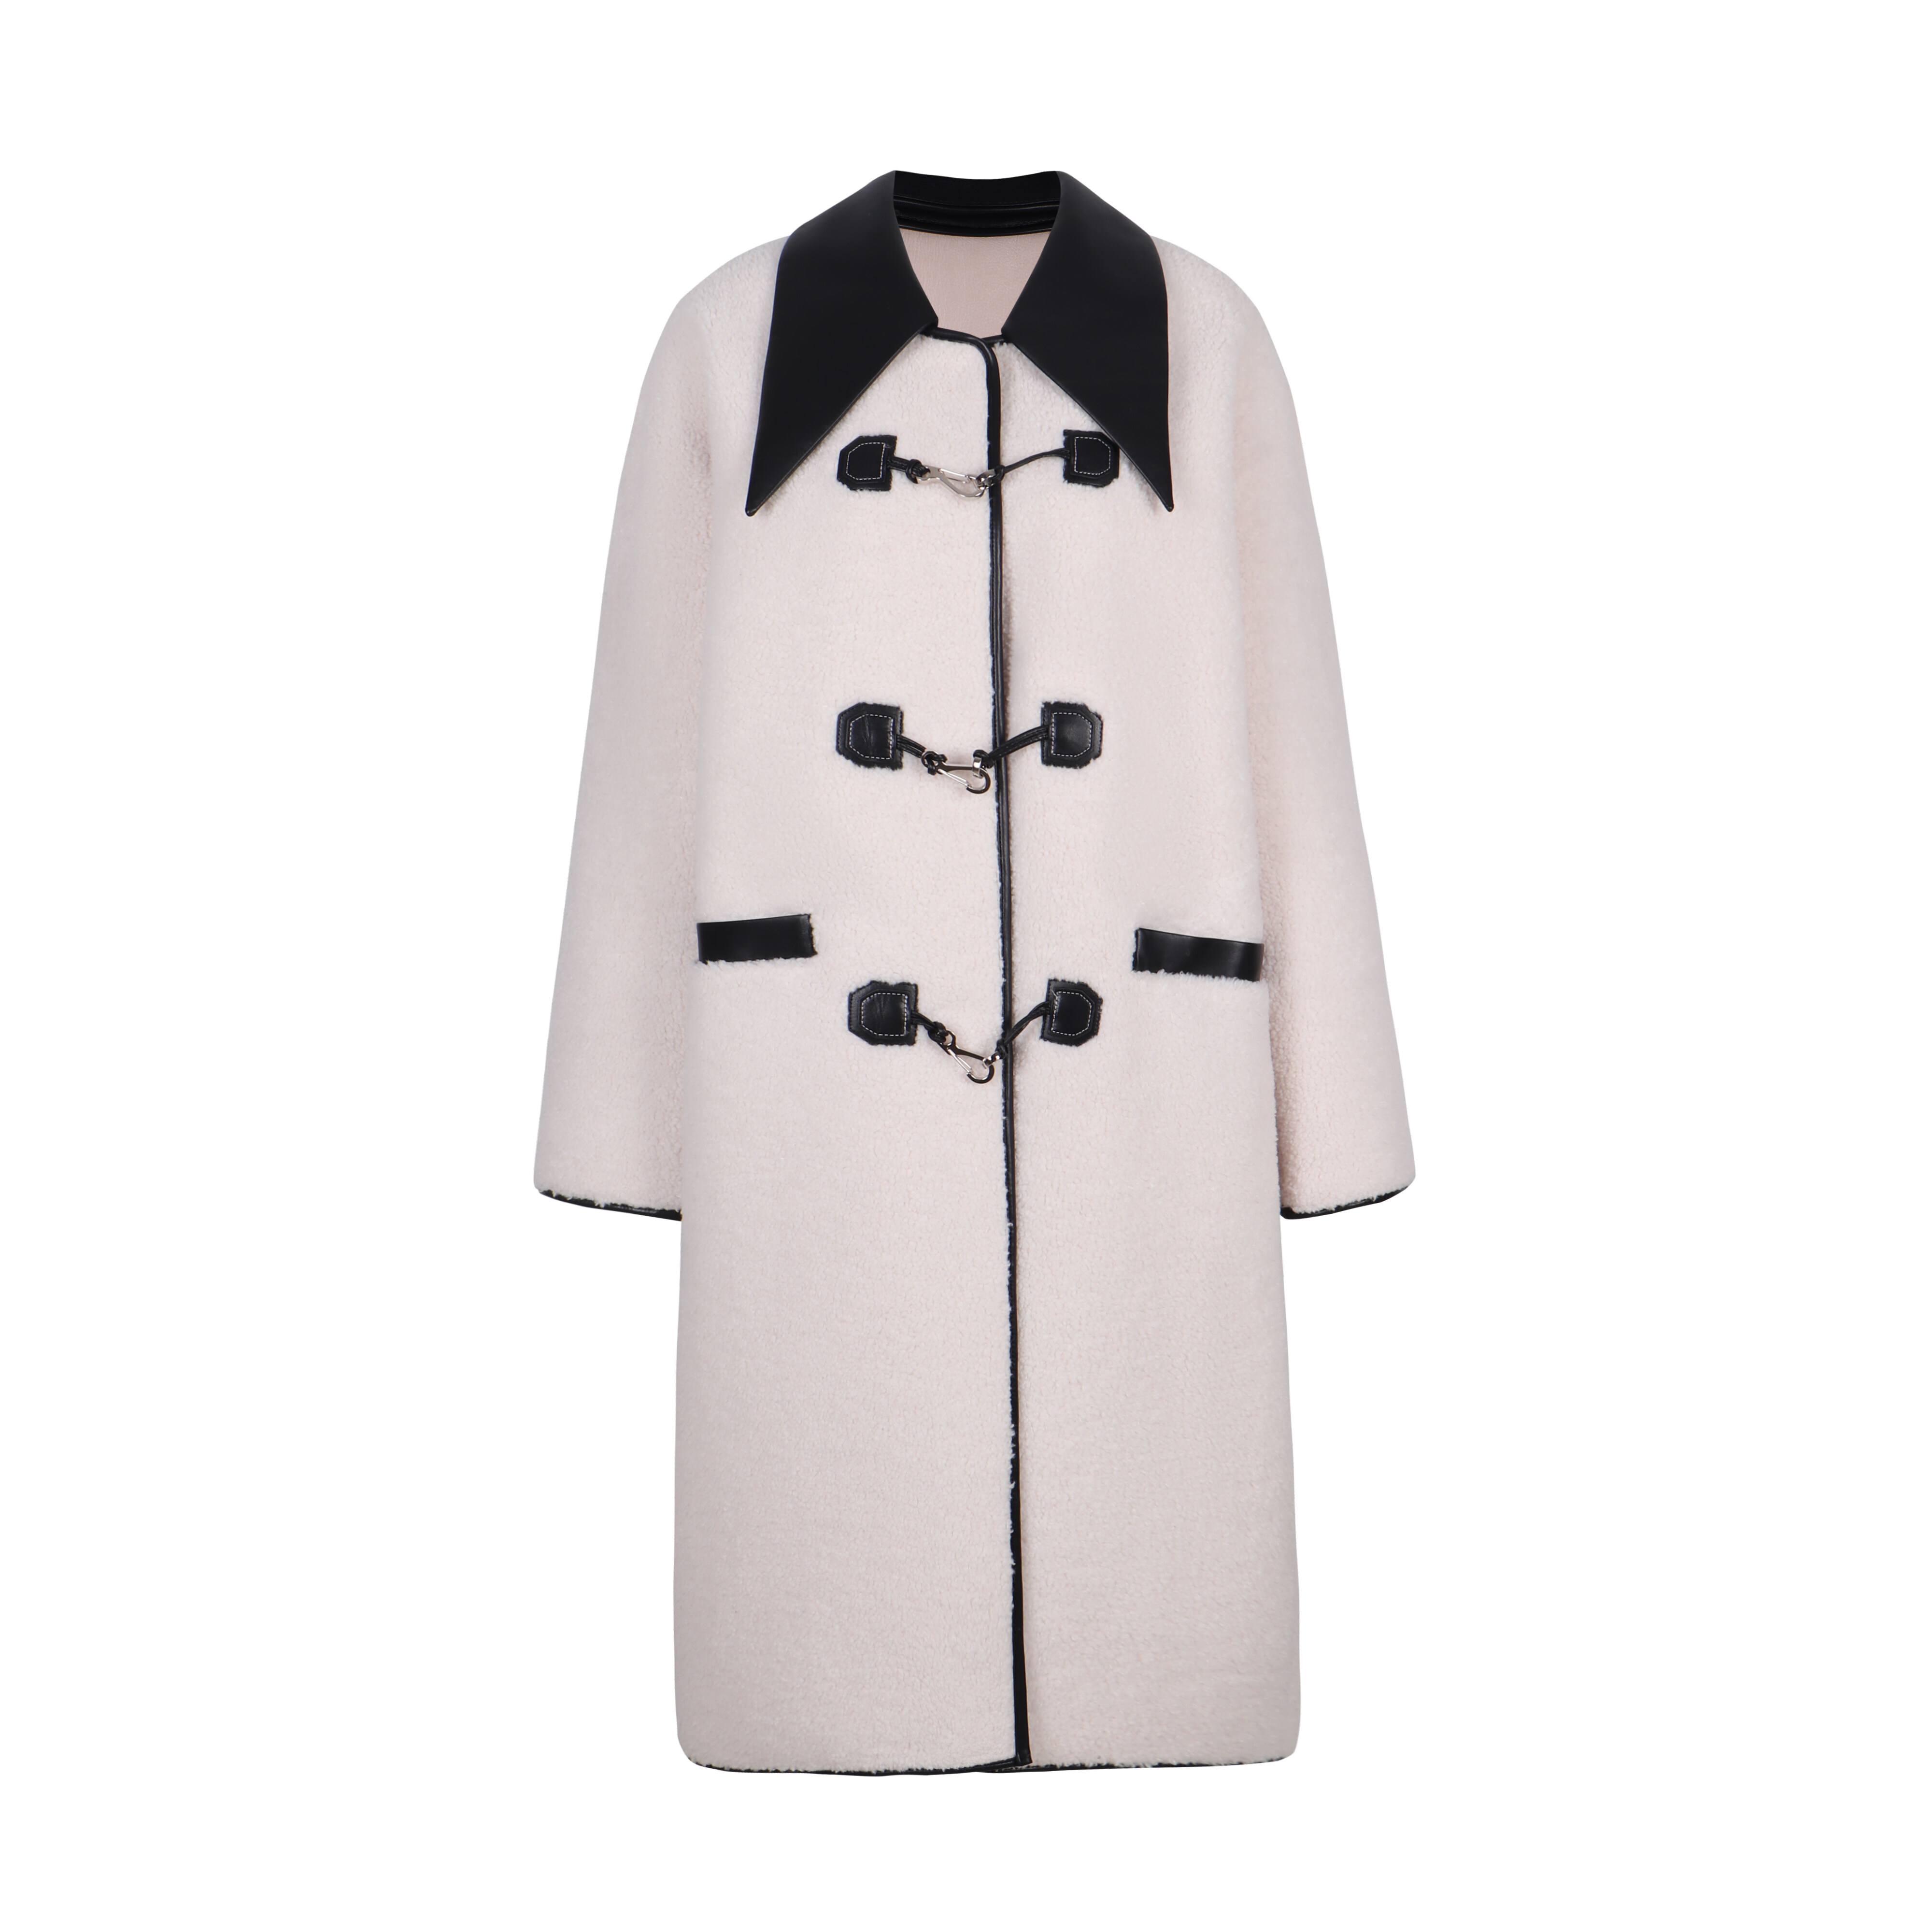 Winter women's coat with soft texture. Winter coat with retro short coat and faux fur coat